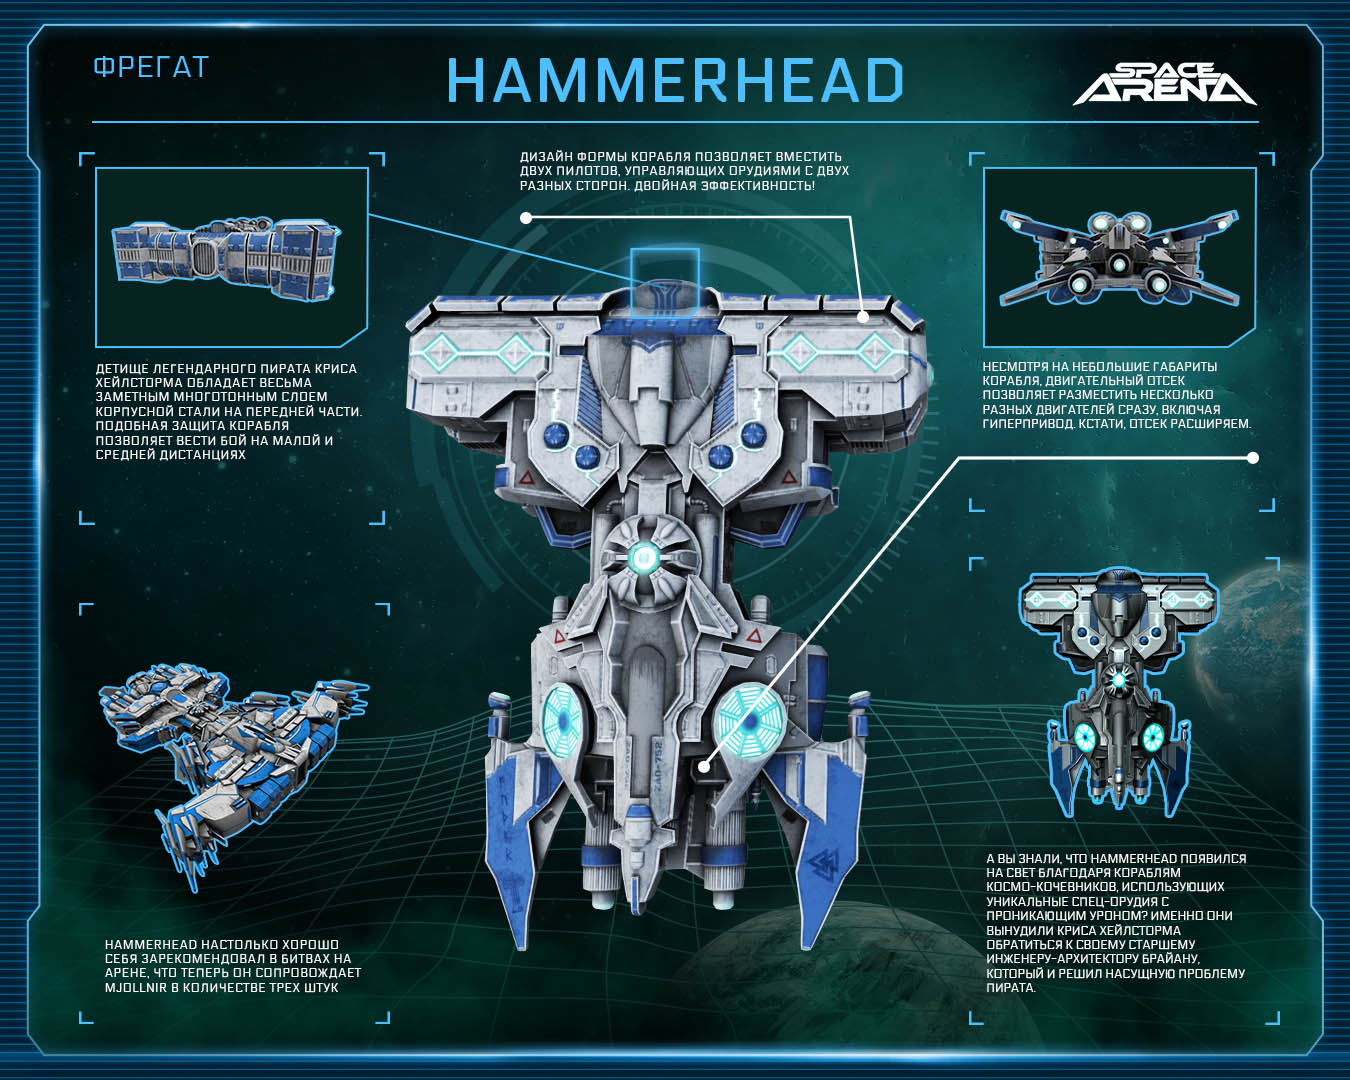 Space arena корабли. Сборка Hammerhead. Space Arena конструкции кораблей Hammerhead. Фрегат Hammerhead сборка. Космический атлас.